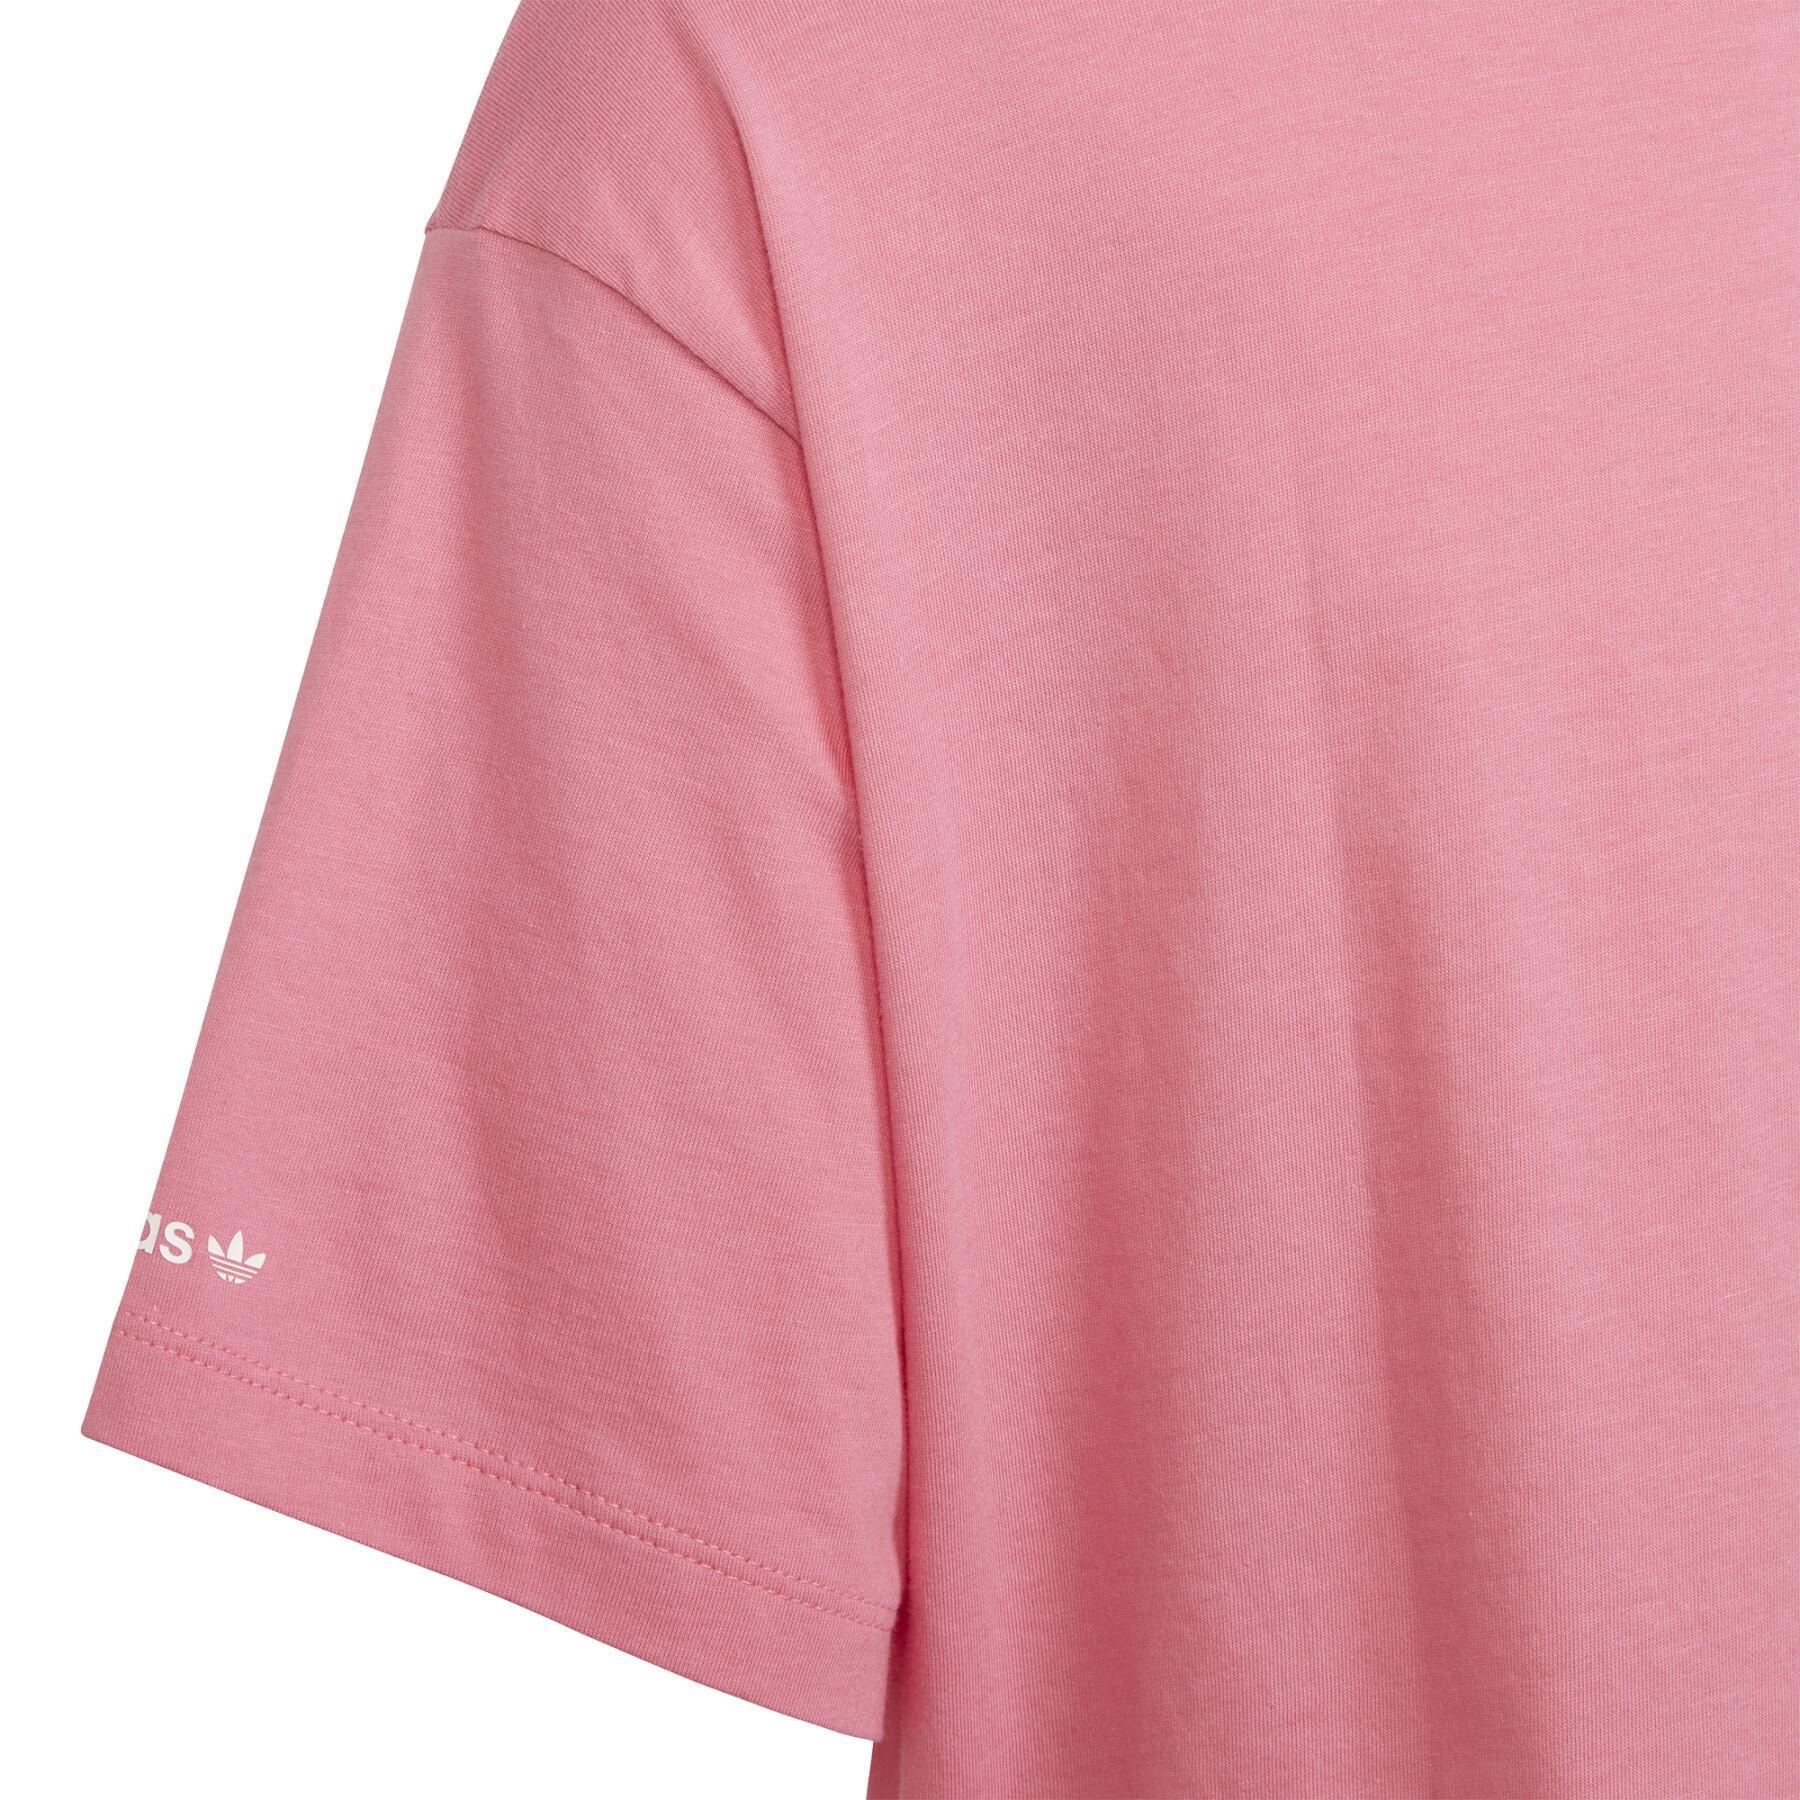 Mädchen-T-Shirt adidas Originals Adicolor Cropped